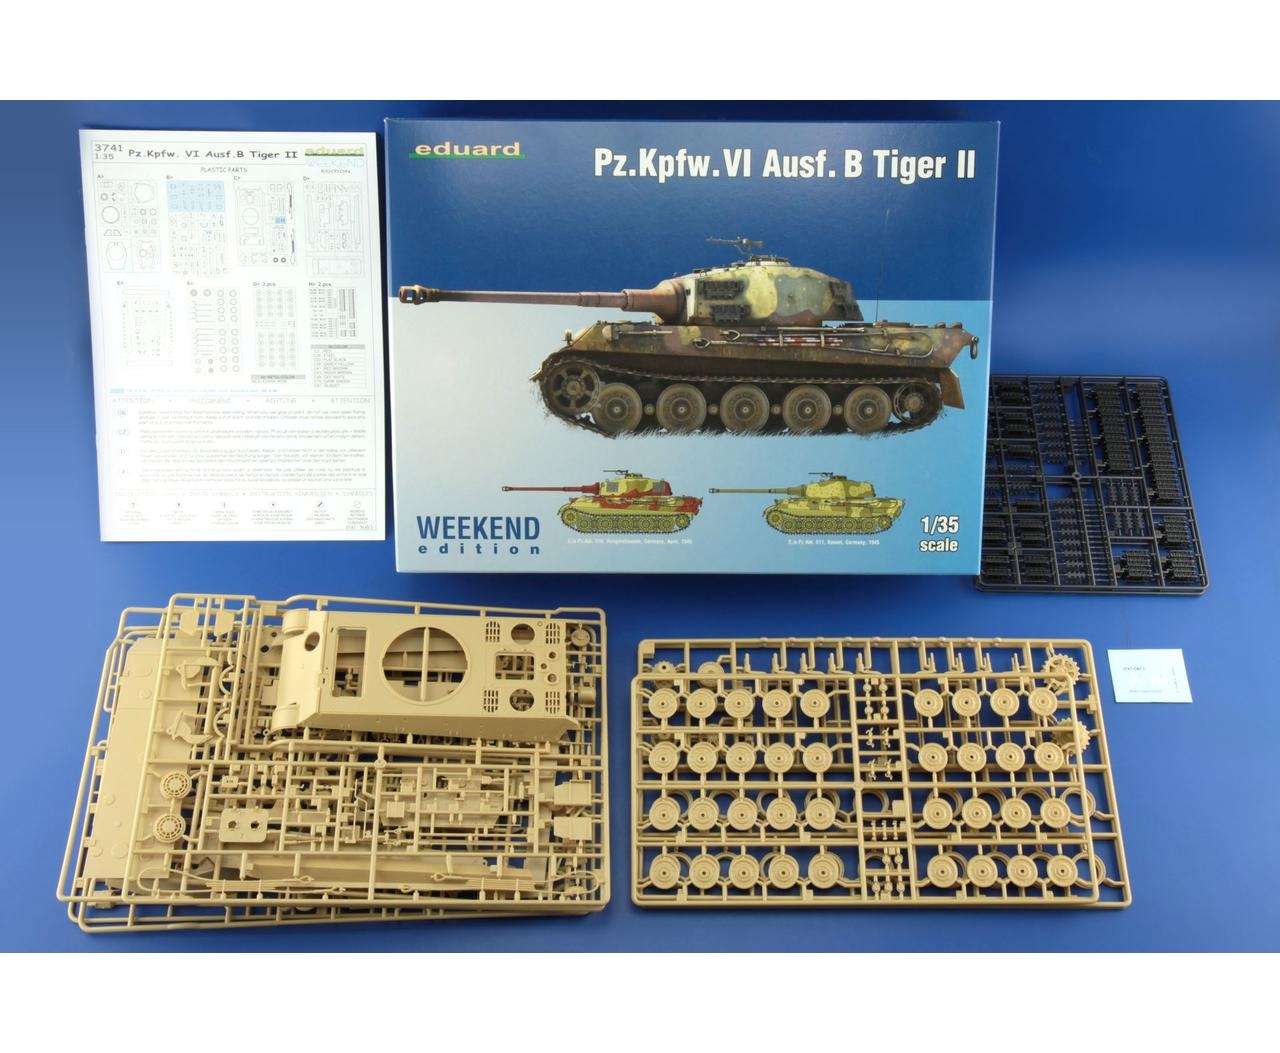 Zawartość pudełka model Tiger II.-image_Eduard_3741_3